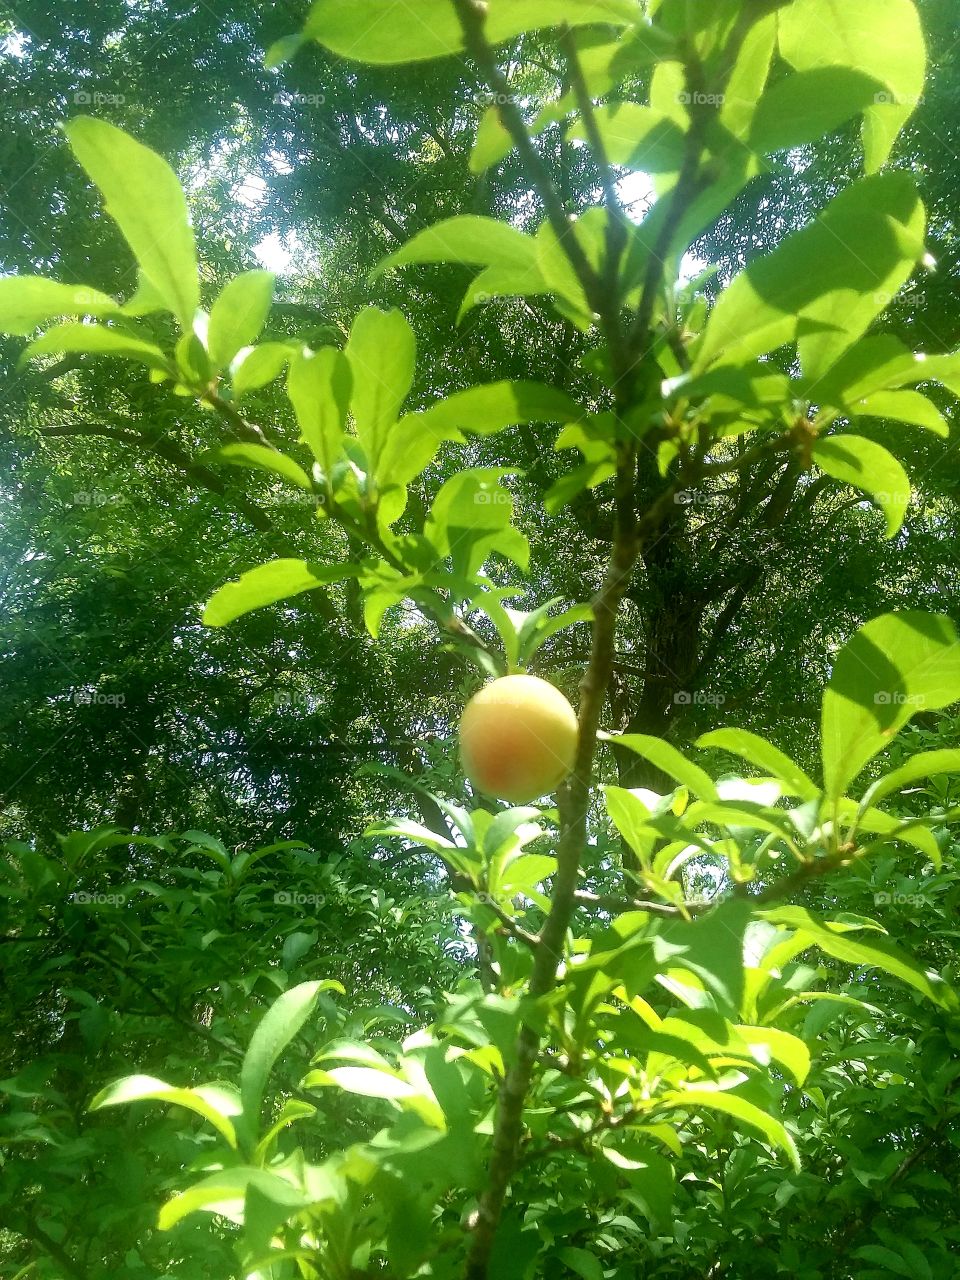 Fruits ripening on the tree dwarf plum